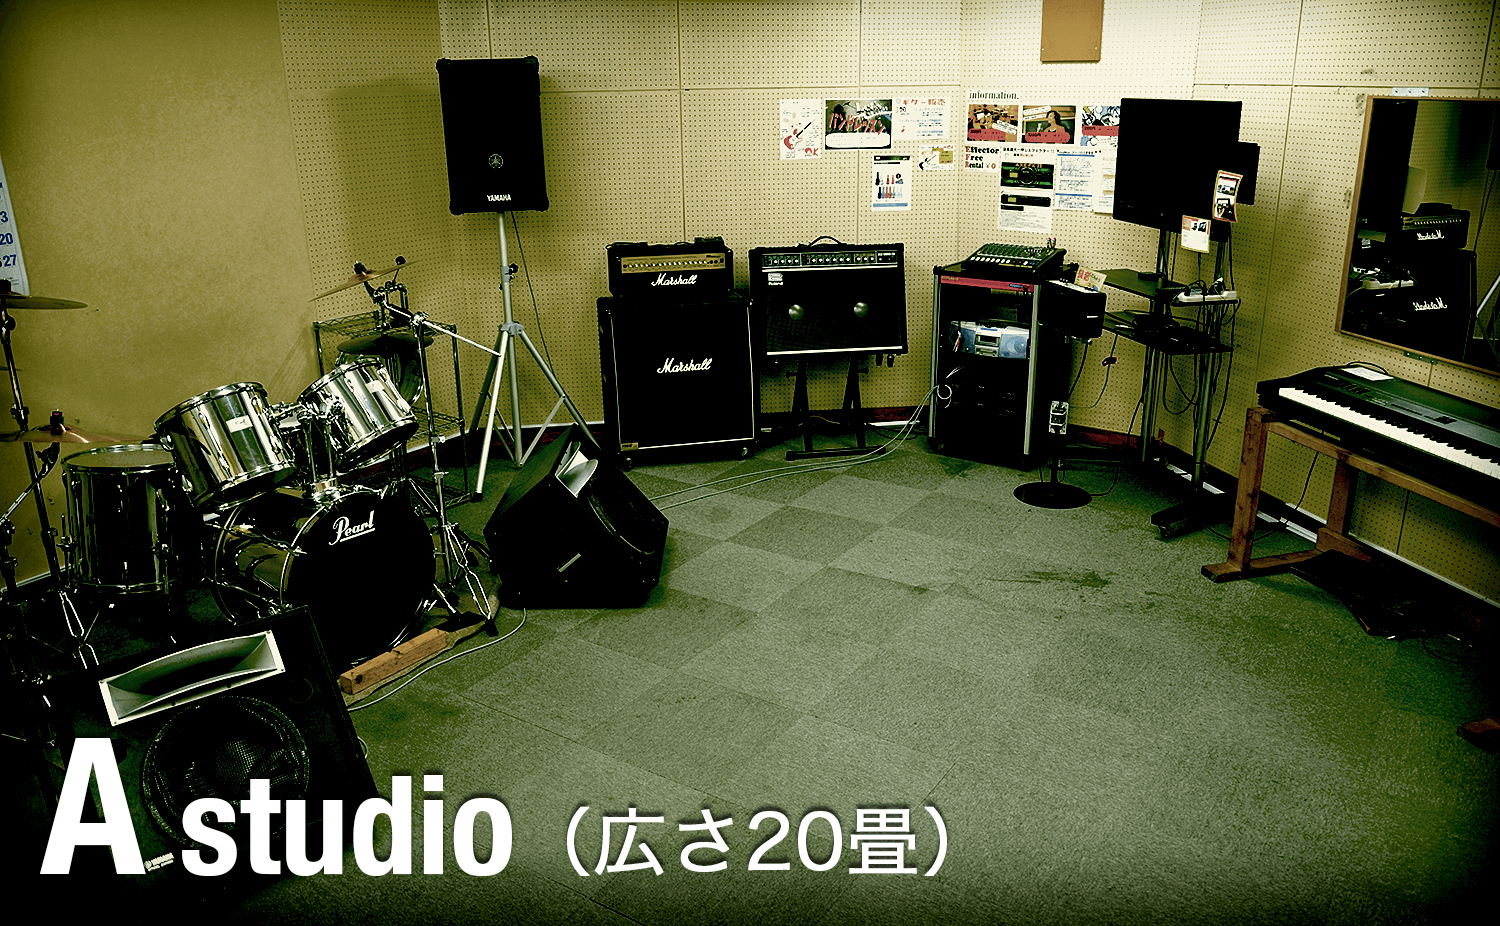 STUDIO O&K 三島店 Aスタジオ